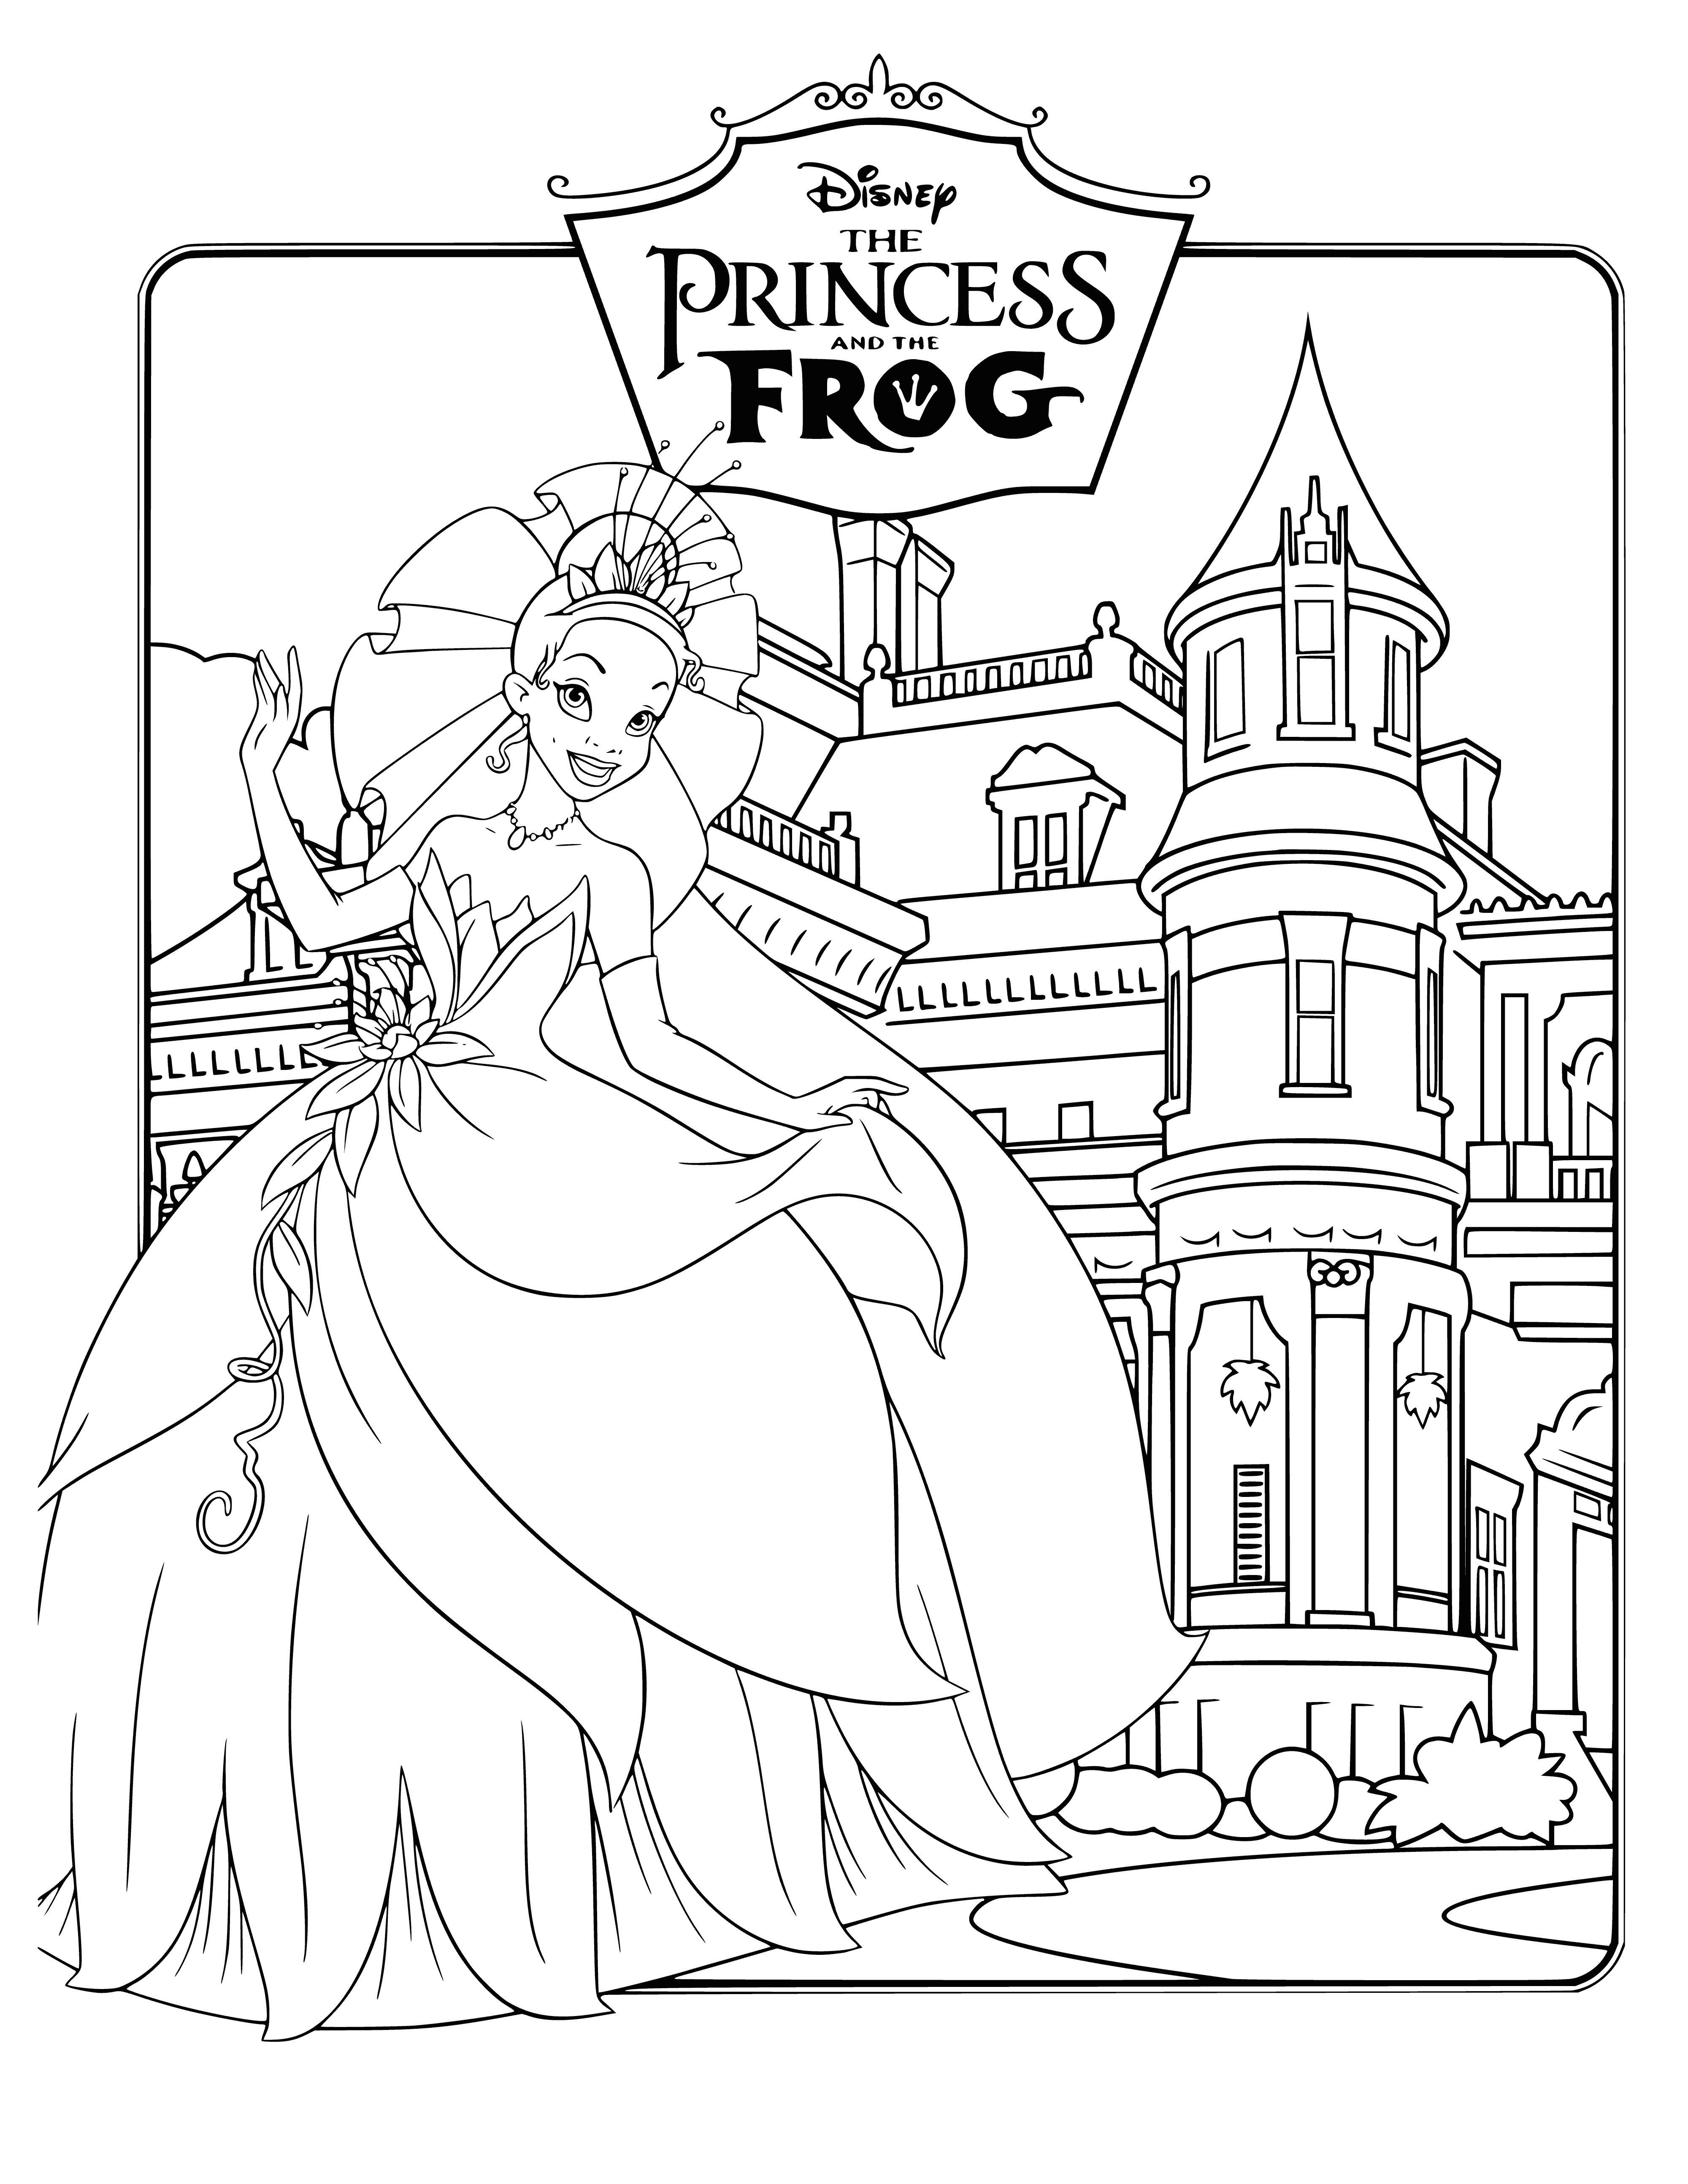 Princess Tiana coloring page